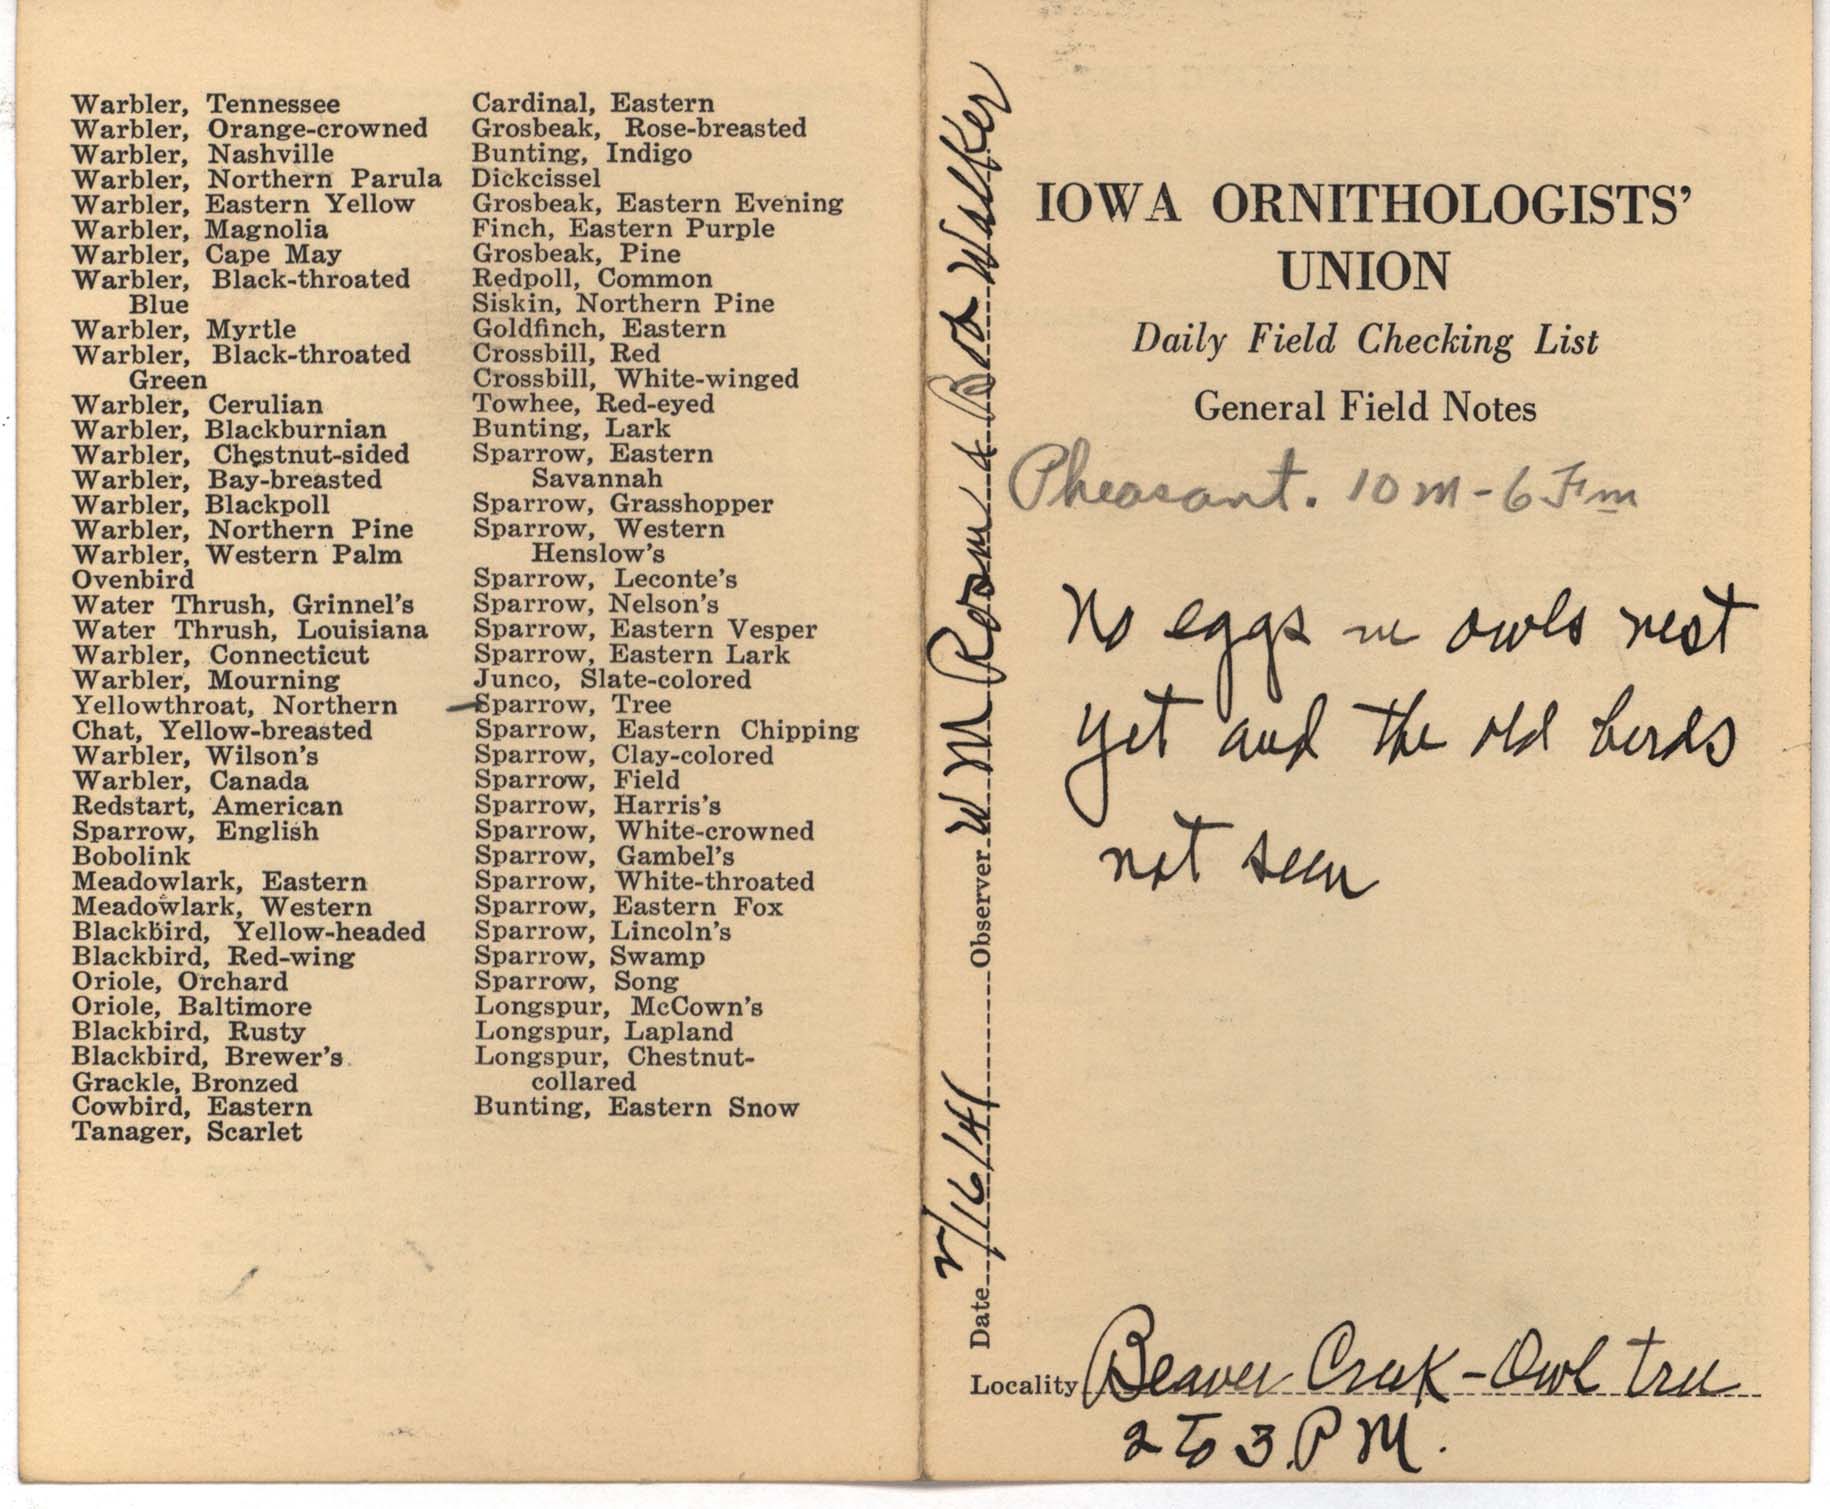 Daily field checking list by Walter Rosene, February 16, 1941